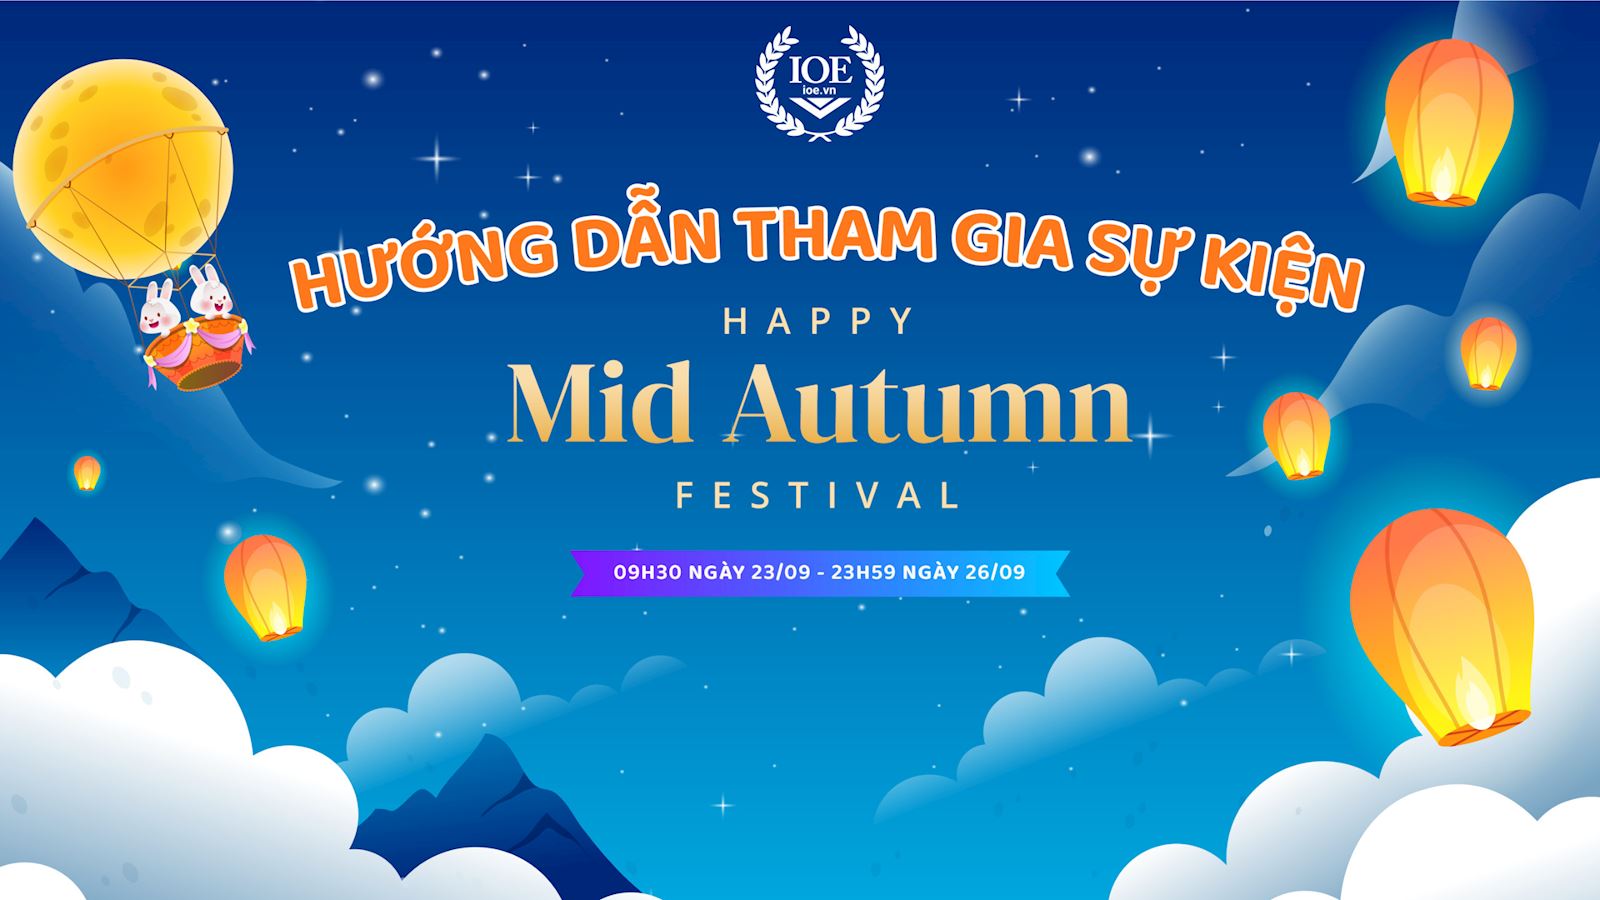 Hướng dẫn tham gia sự kiện "Happy Mid-Autumn Festival"